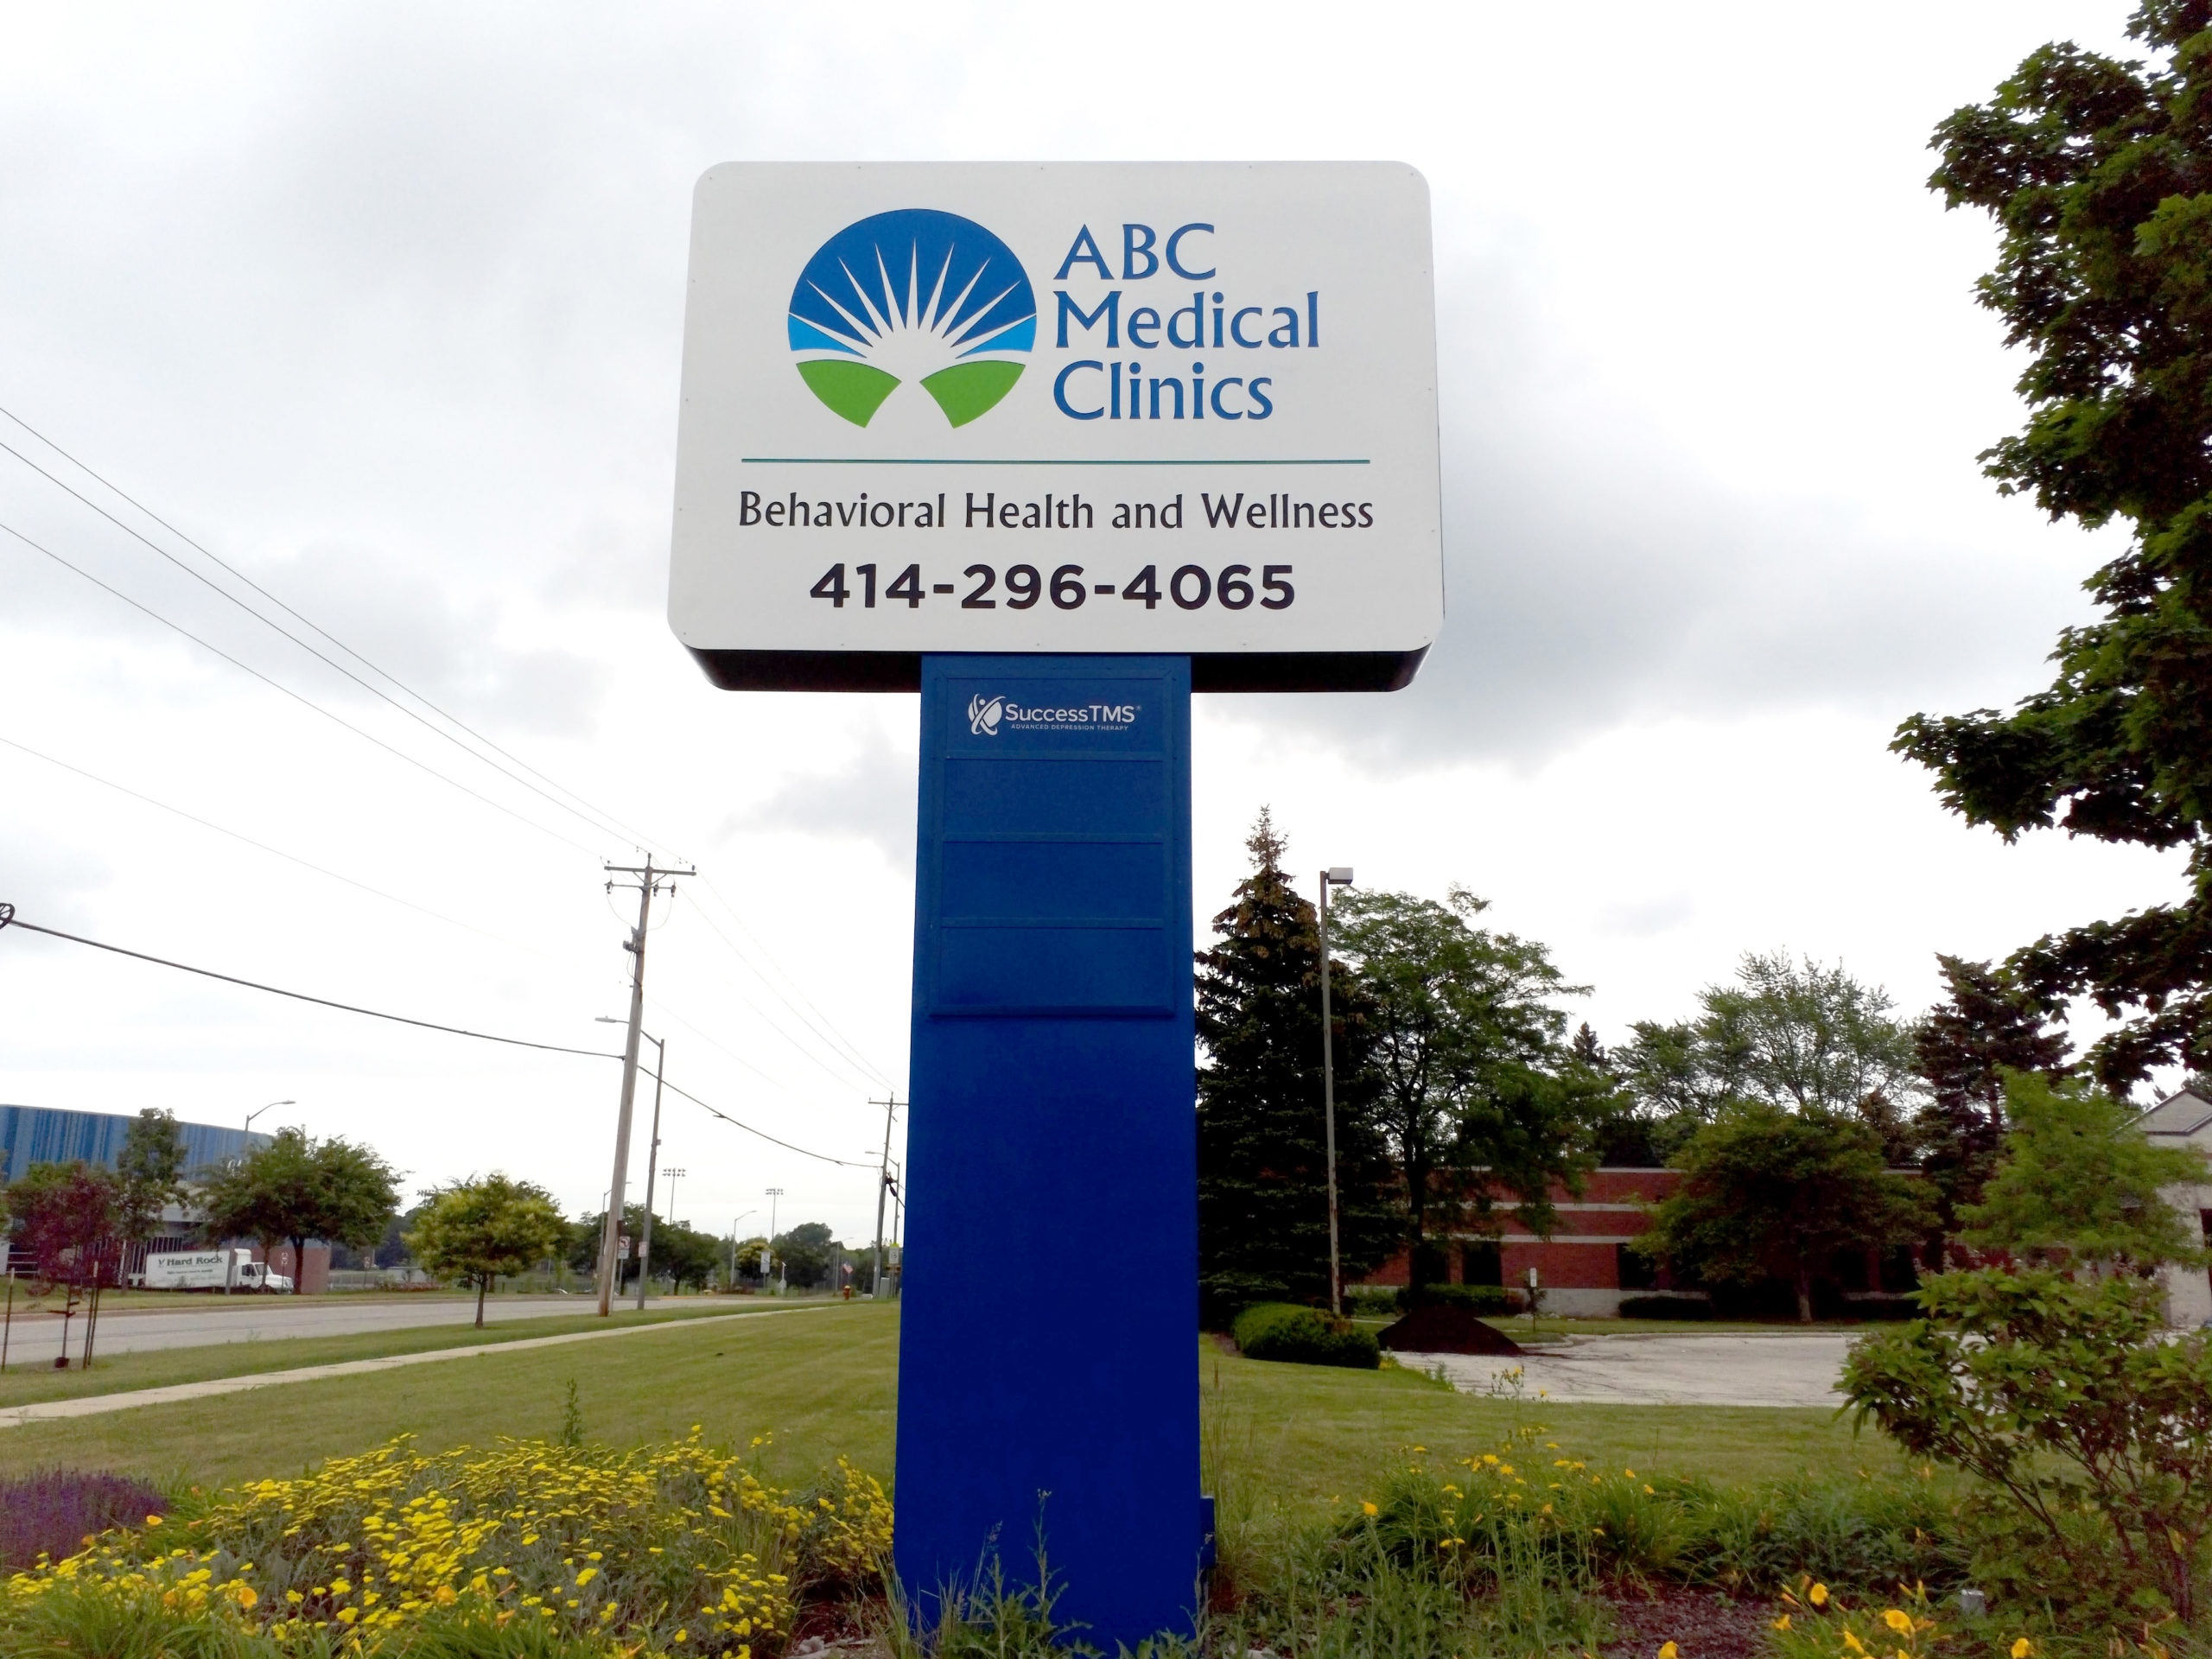 abc medical clinics sign